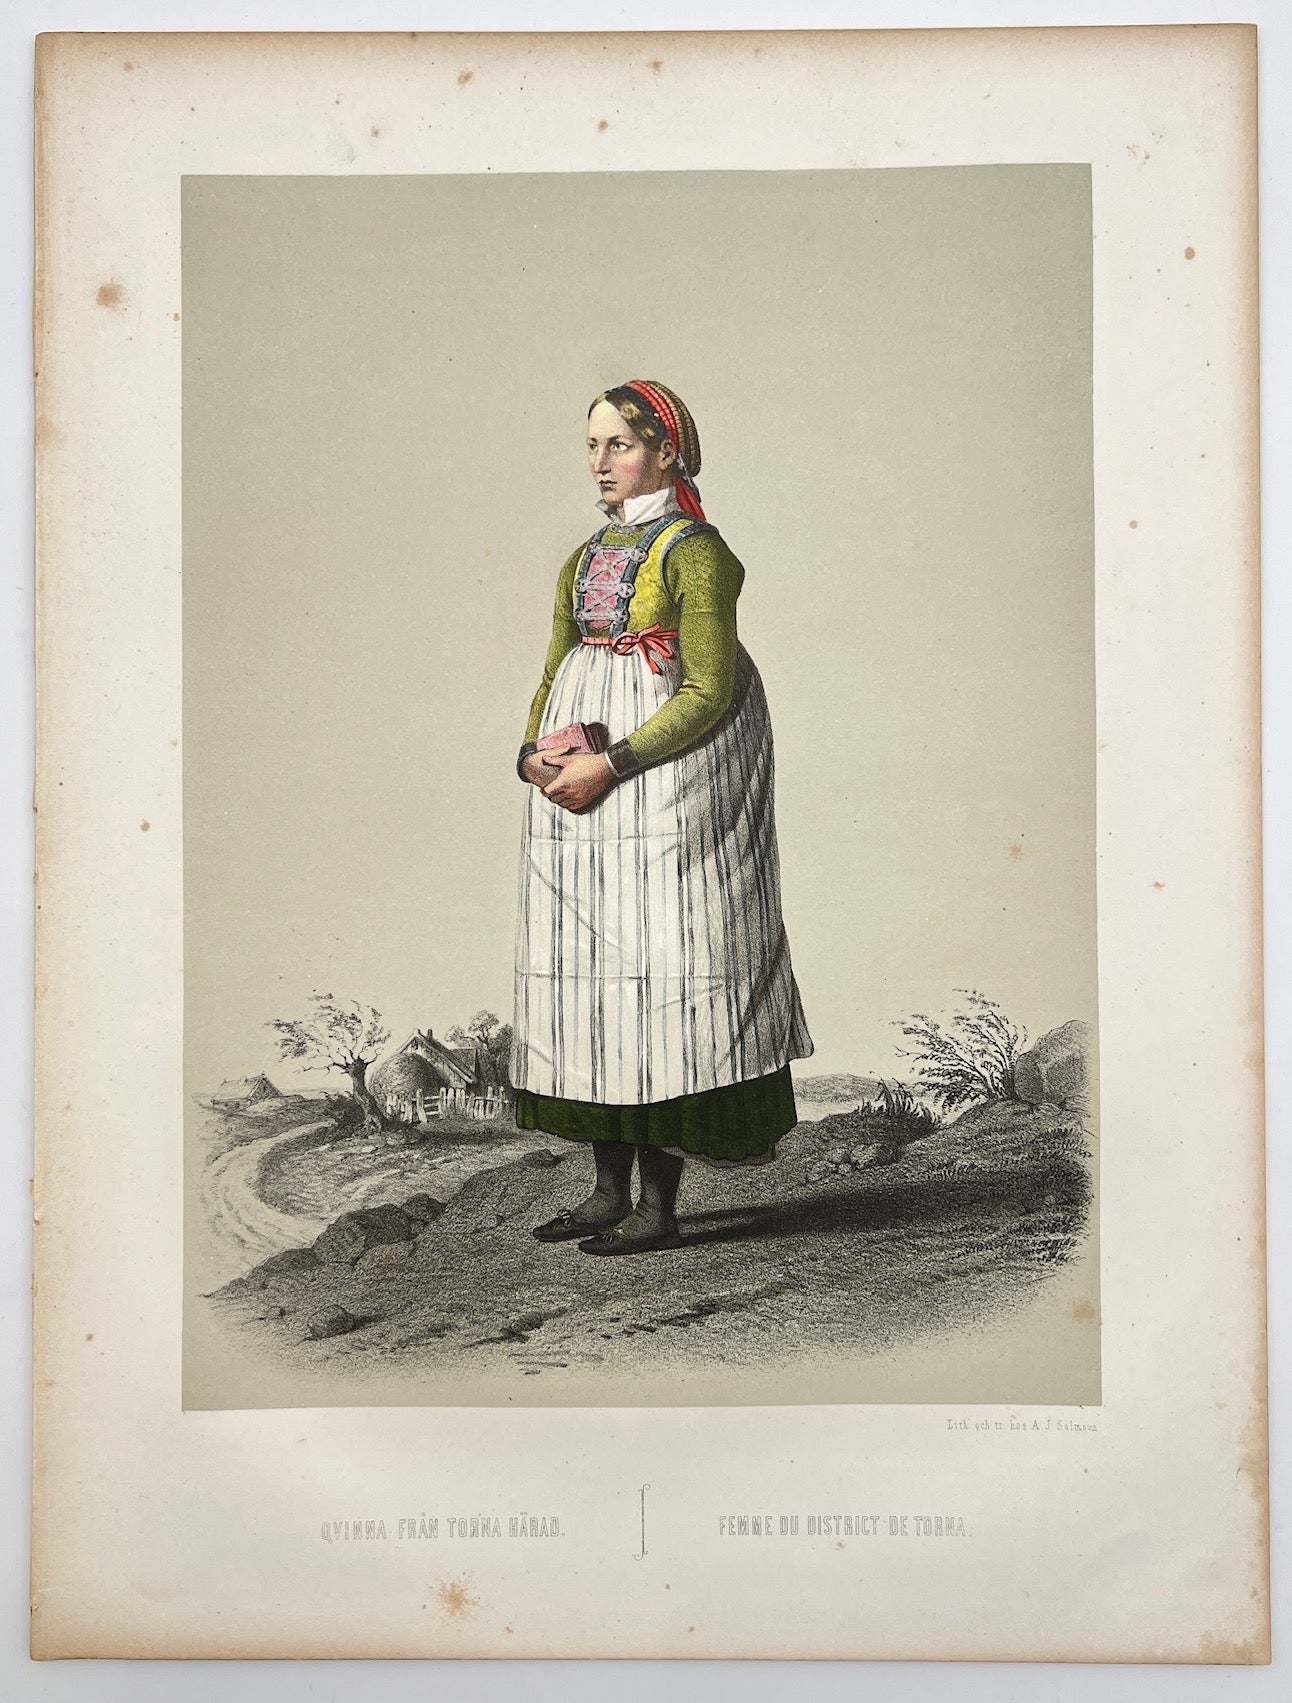 Antique Costume Print - Scanian Folk Costumes - Woman from Torna Distric - 1872 - Dahlströms Fine Art